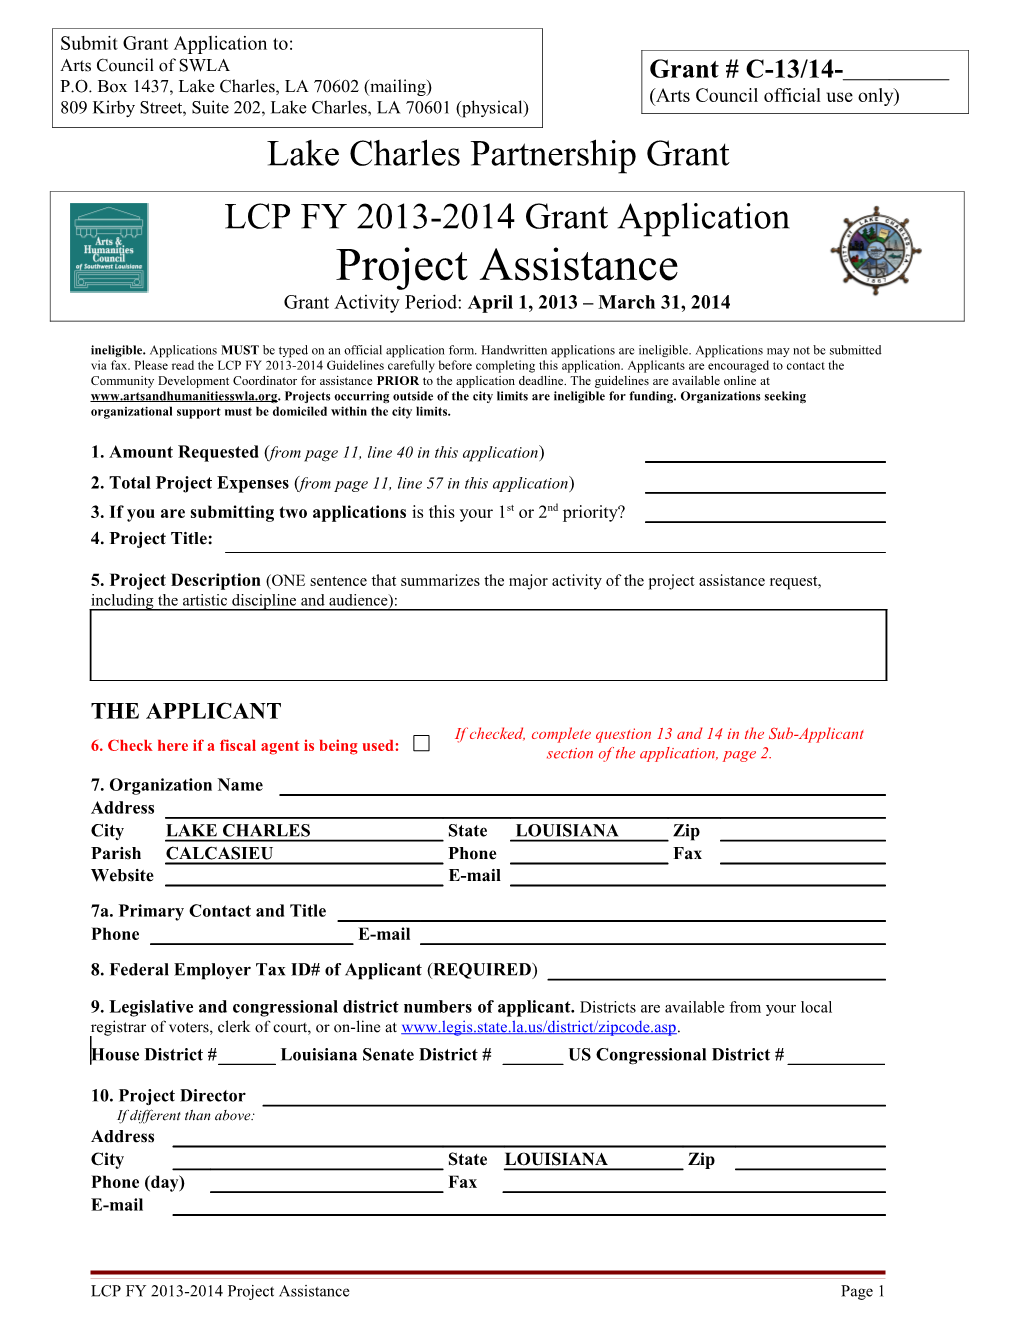 LC Partnership Grants Program Application 2006 - Project Assistance